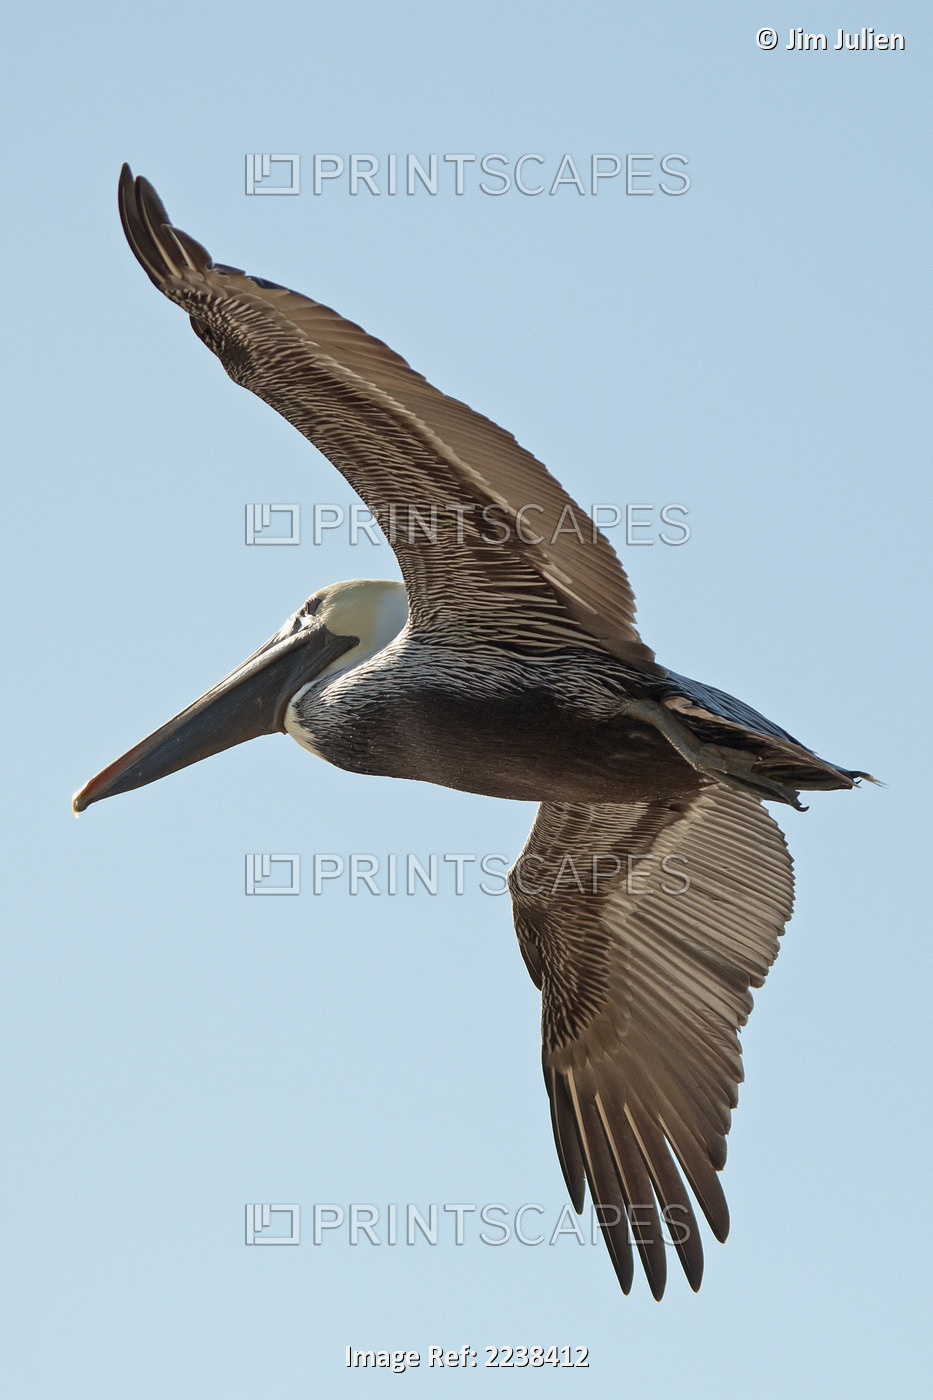 A bird in flight;Gulf shores alabama united states of america